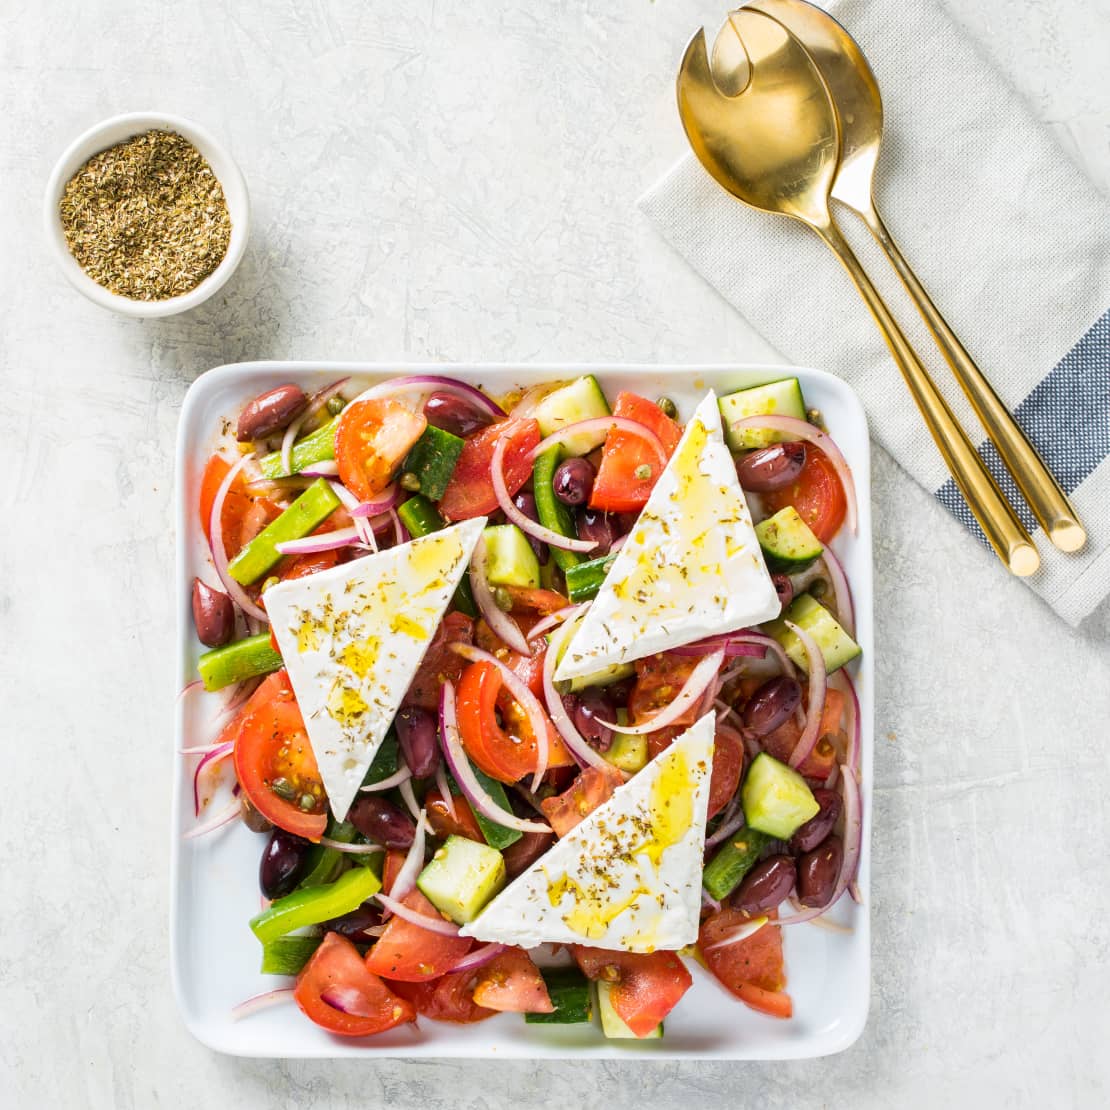 Horiatiki Salata (Hearty Greek Salad) for Two